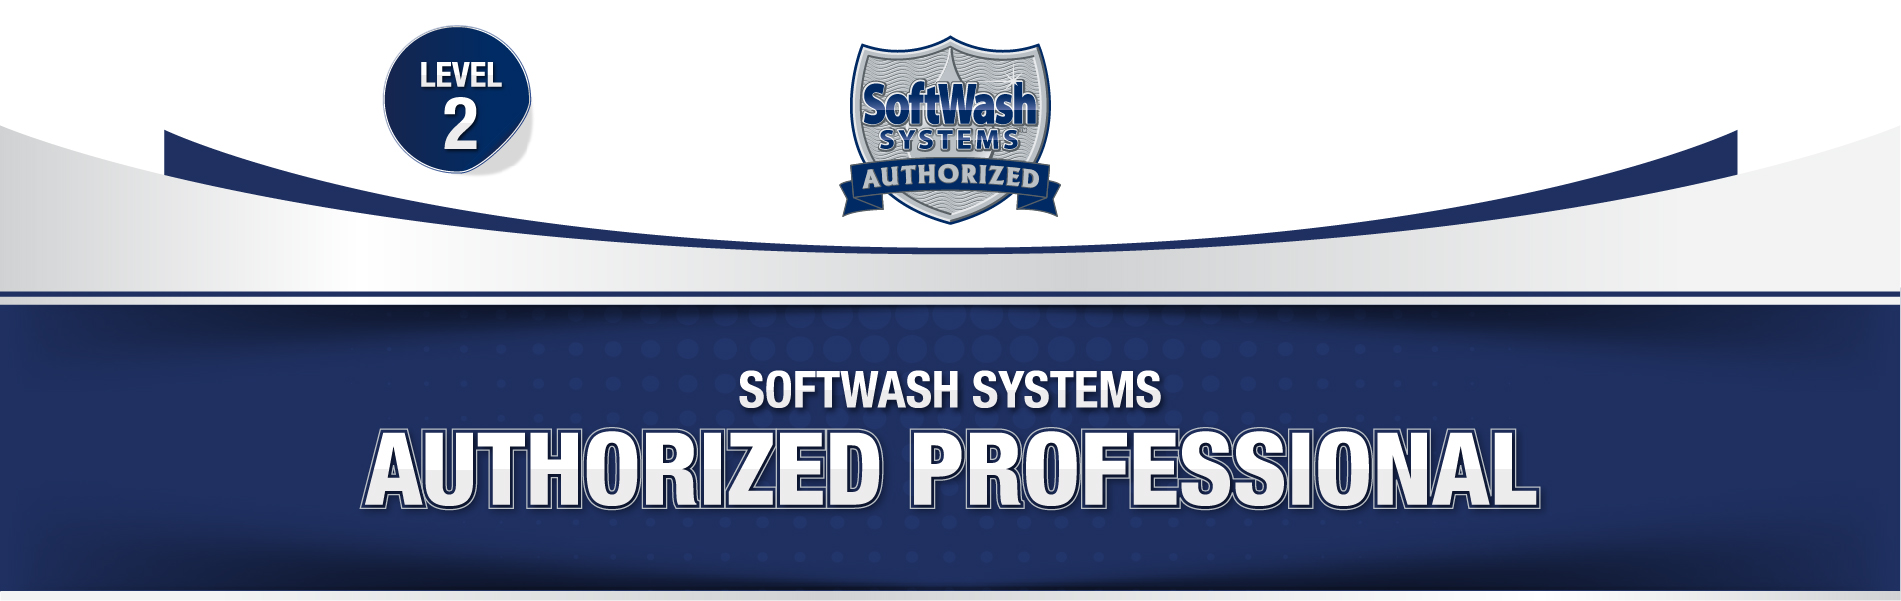 Softwash system authorized professional